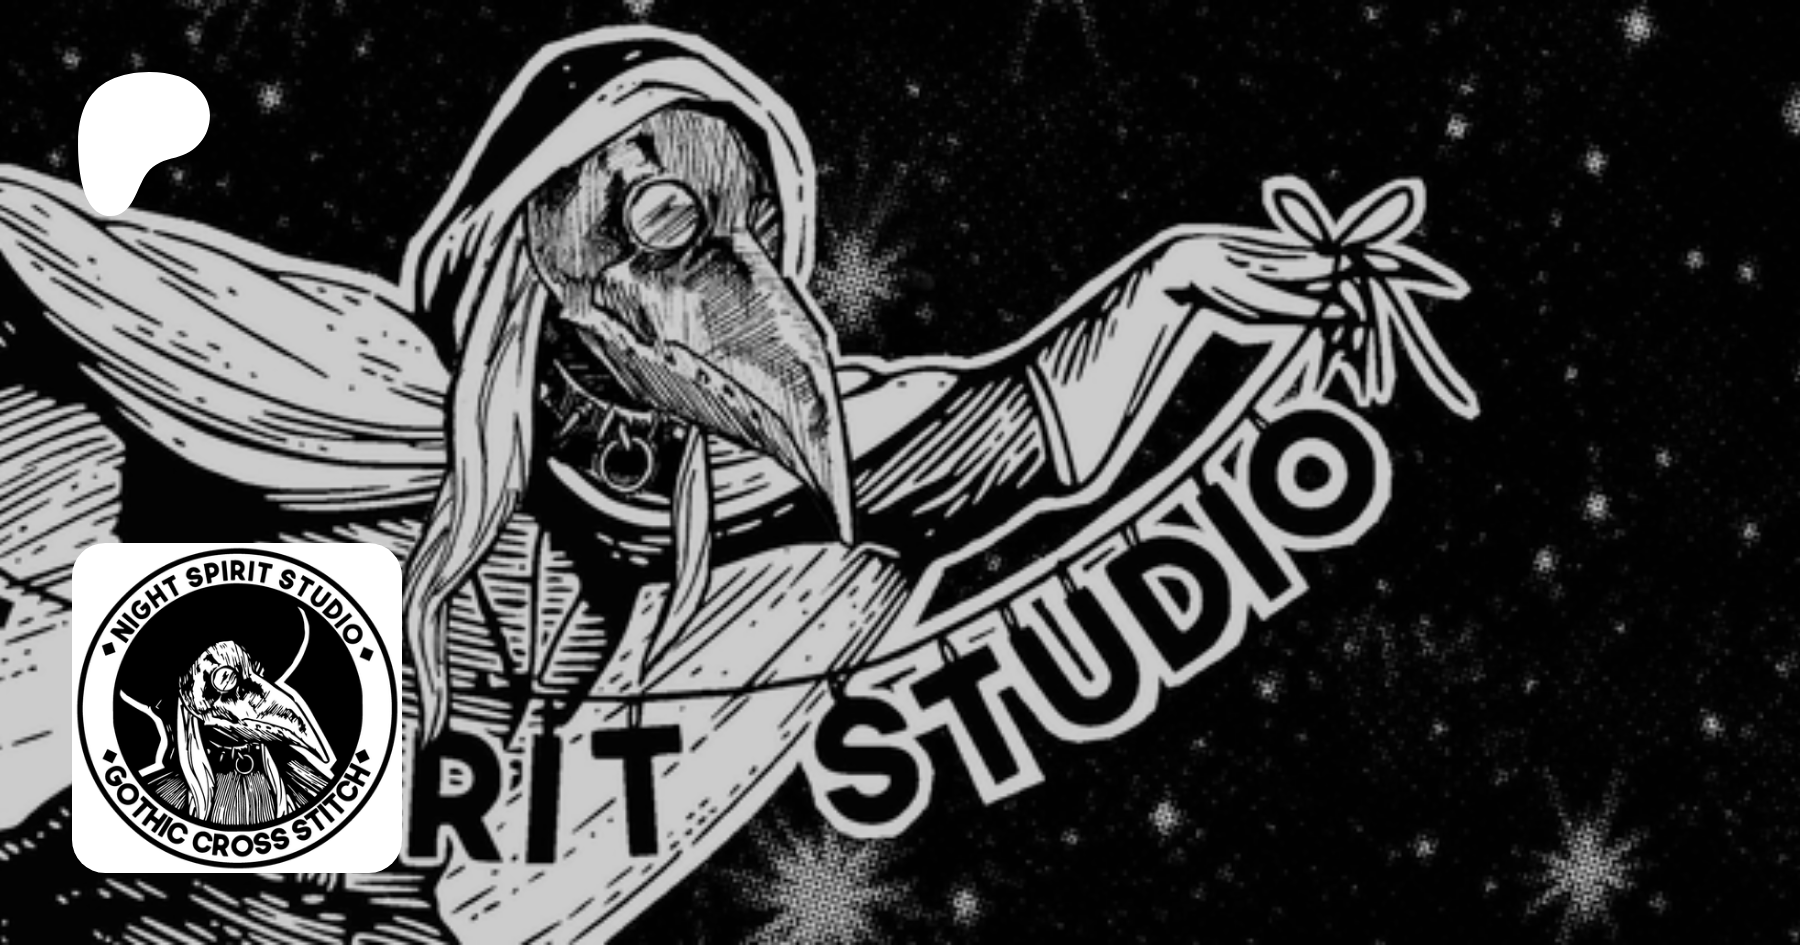 Gold Gothic Embroidery and Cross Stitch Scissors | Night Spirit Studio